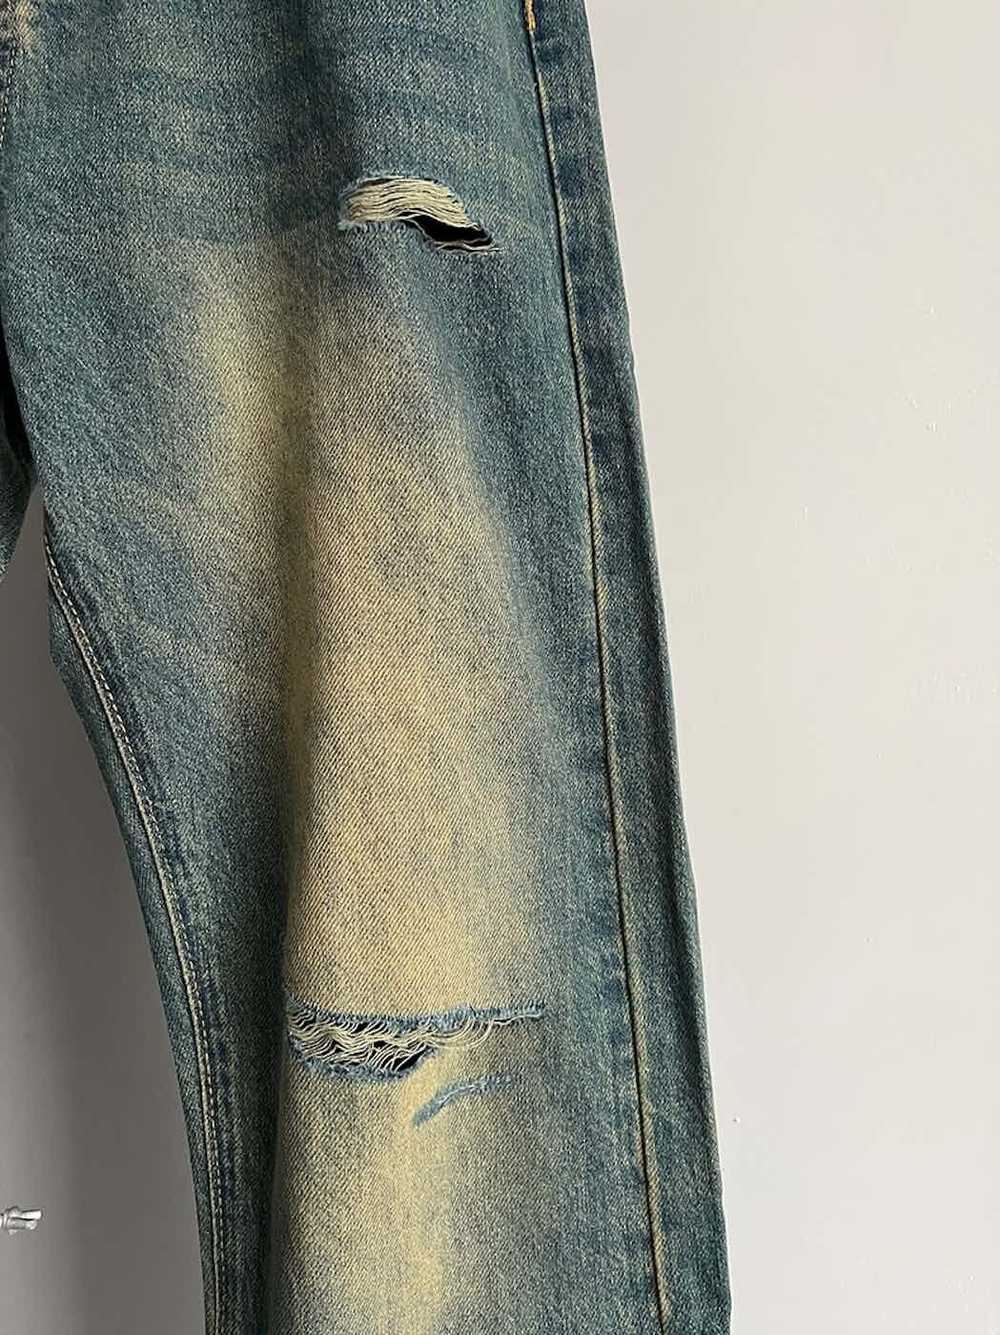 Distressed Denim × Jean × Vintage ripped damaged … - image 5